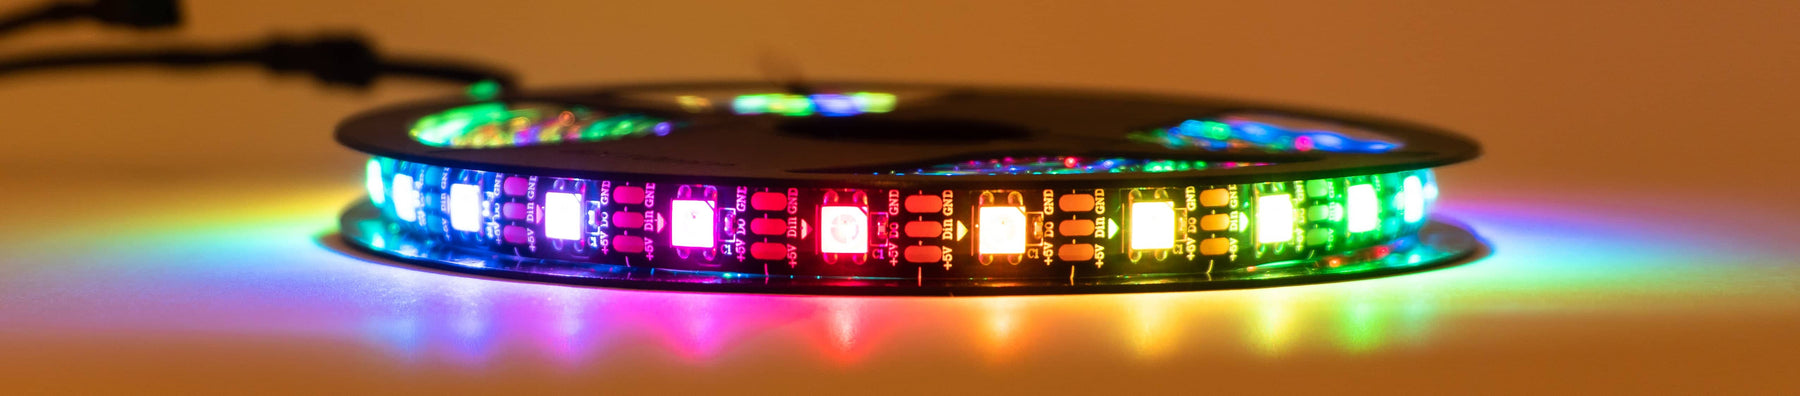 HyperDrive Add-On LEDS